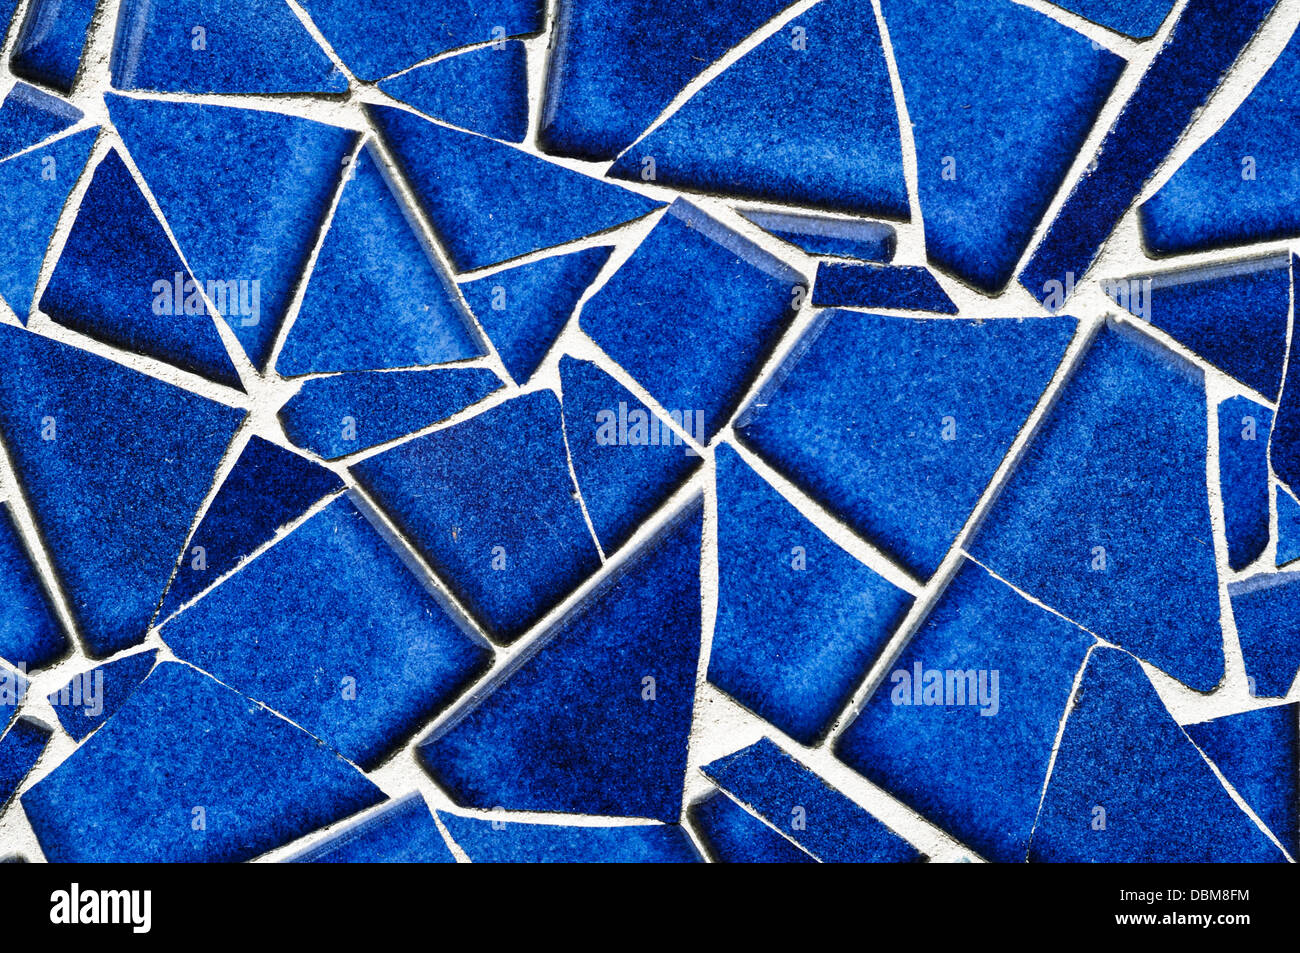 Abstrakt - blaue Fliesen Mosaik, Nahaufnahme Stockfoto